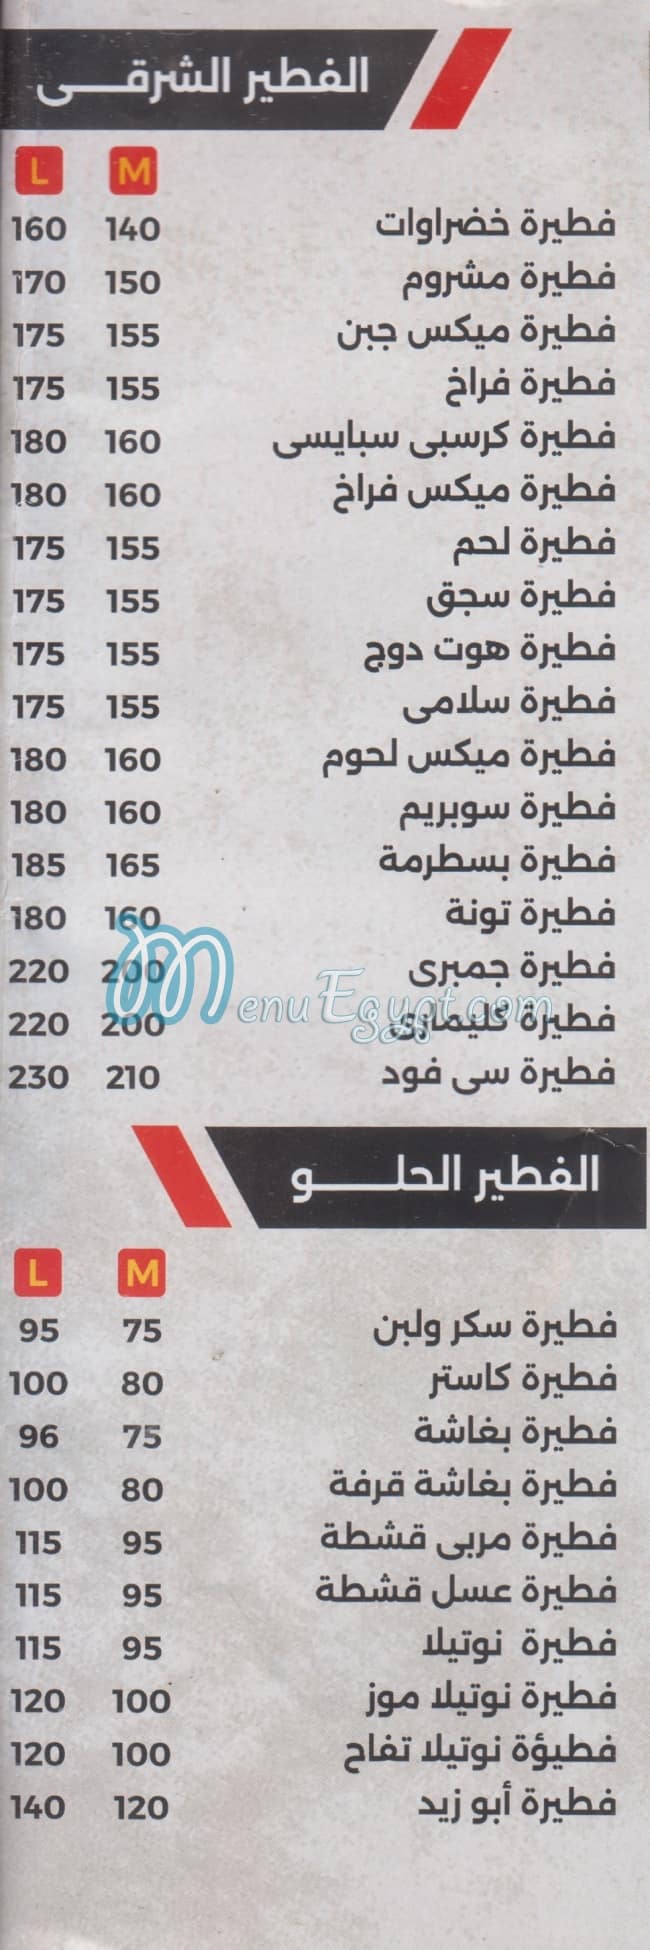 Abo Zied menu Egypt